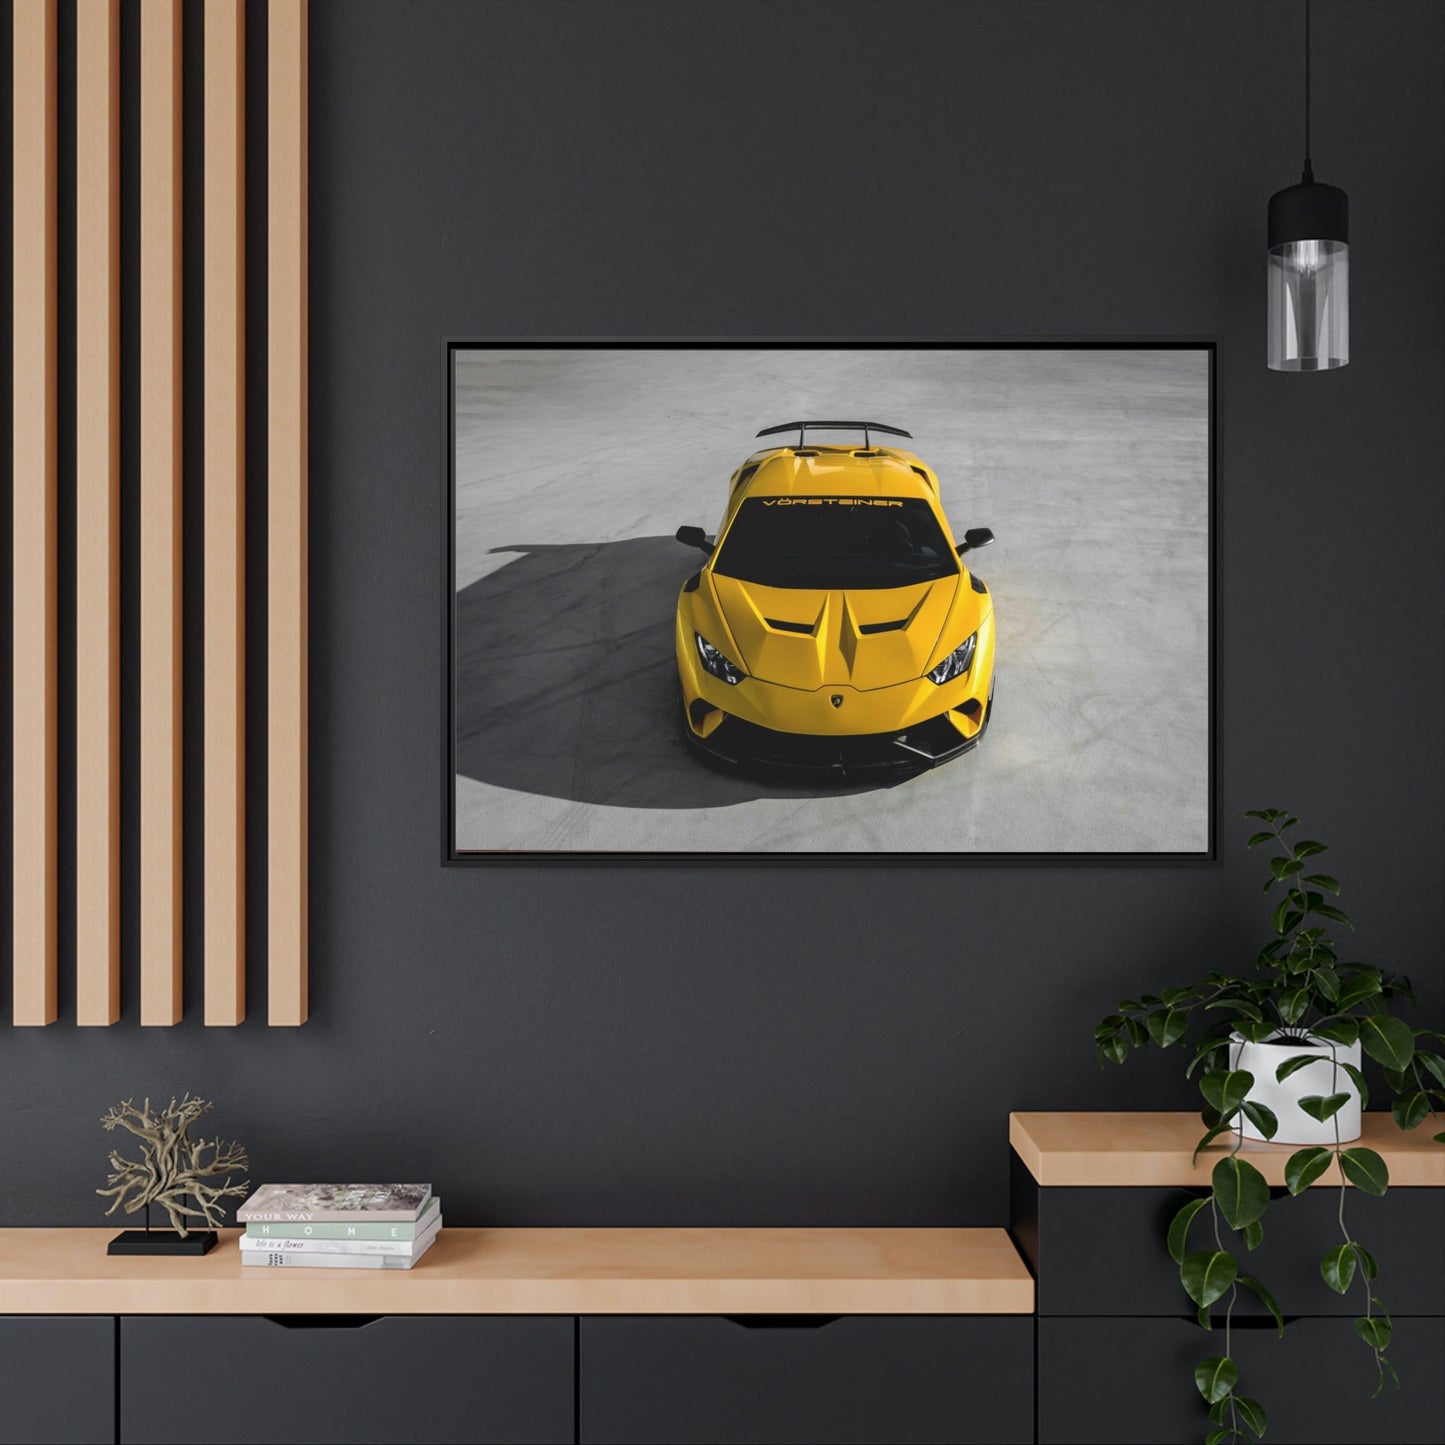 Italian Masterpiece on Canvas & Poster: Striking Print of Lamborghini